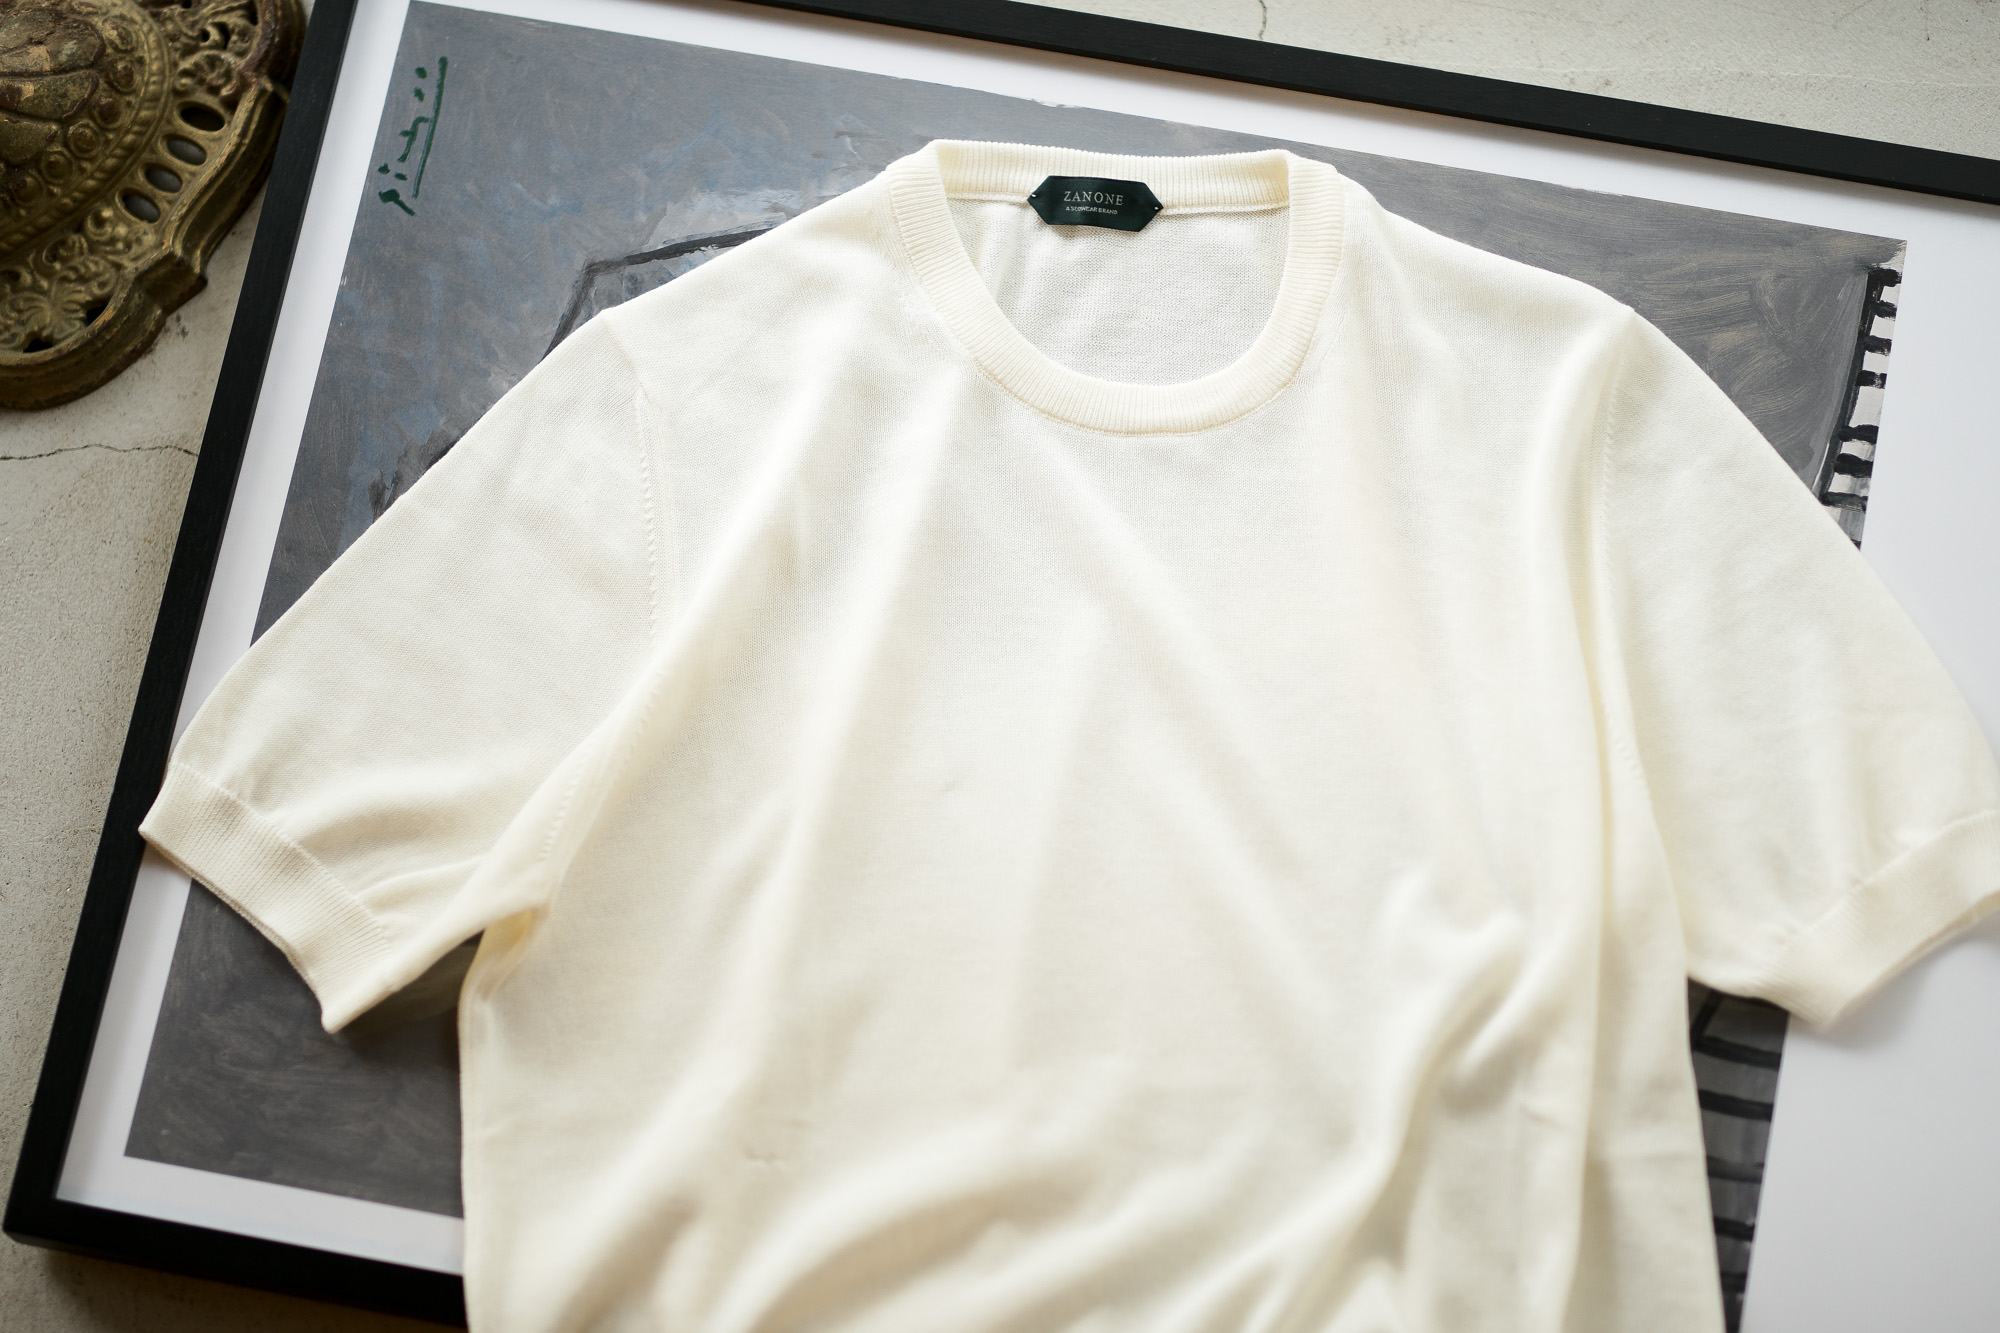 ZANONE(ザノーネ) Knit T-shirt (ニット Tシャツ) コットンニット Tシャツ WHITE (ホワイト・Z3372) made in italy (イタリア製) 2020 春夏新作 愛知 名古屋 altoediritto アルトエデリット